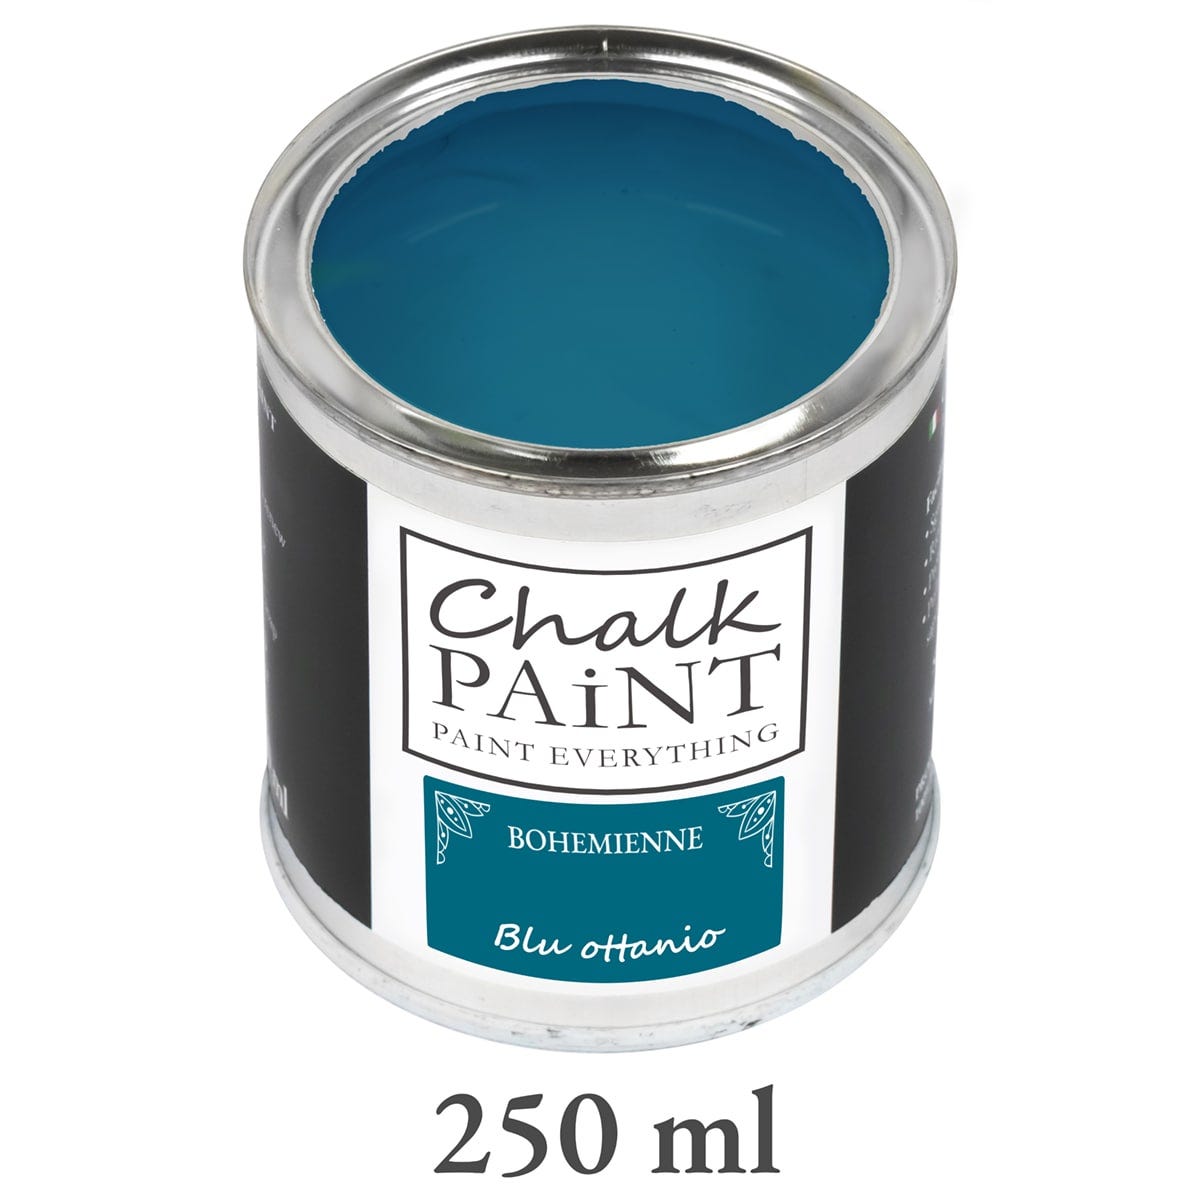 Chalk Paint extra opaca Chalk Paint Everything®- Ricolora mobili pareti  oggetti senza carteggiare - Blu Ottanio 250 ml